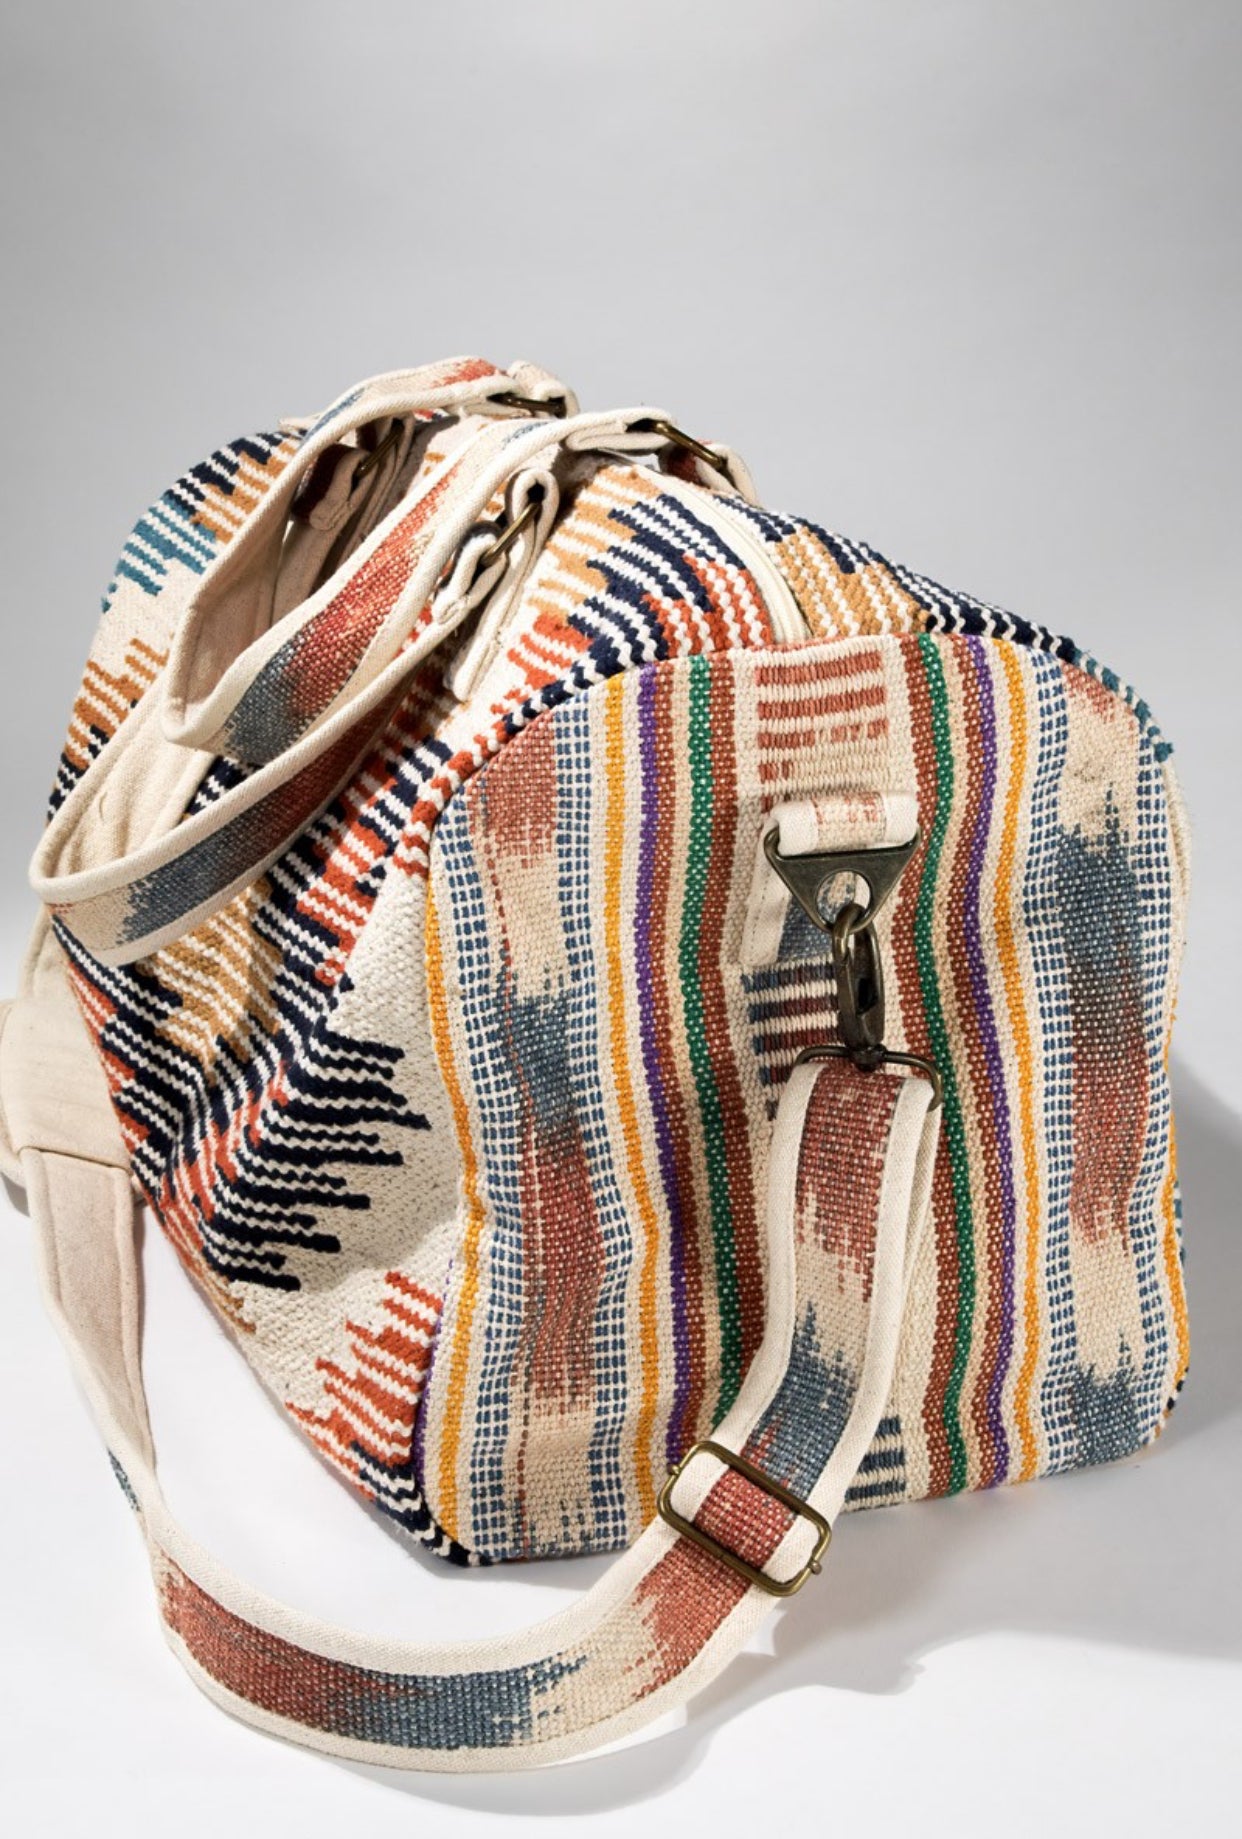 Handmade Ethnic Motif Destiny Duffel Bag